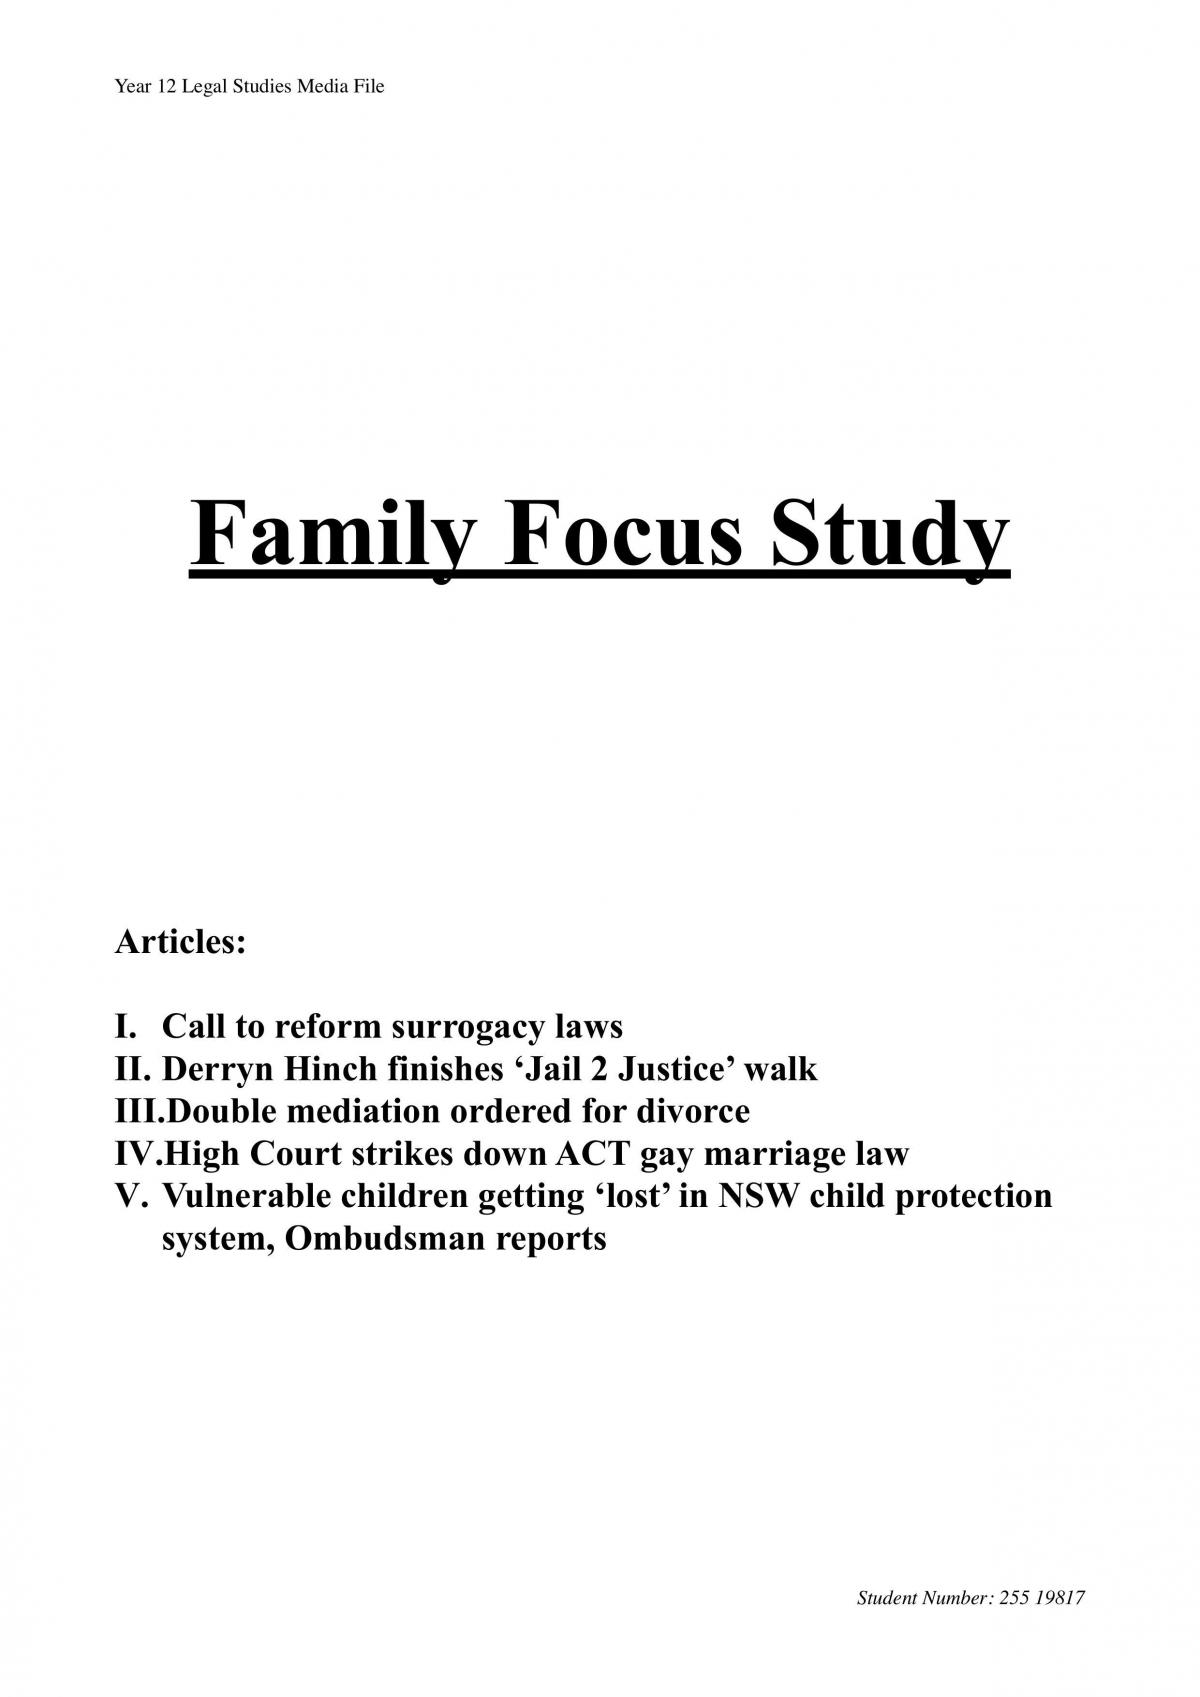 Legal Studies Media File - Page 1